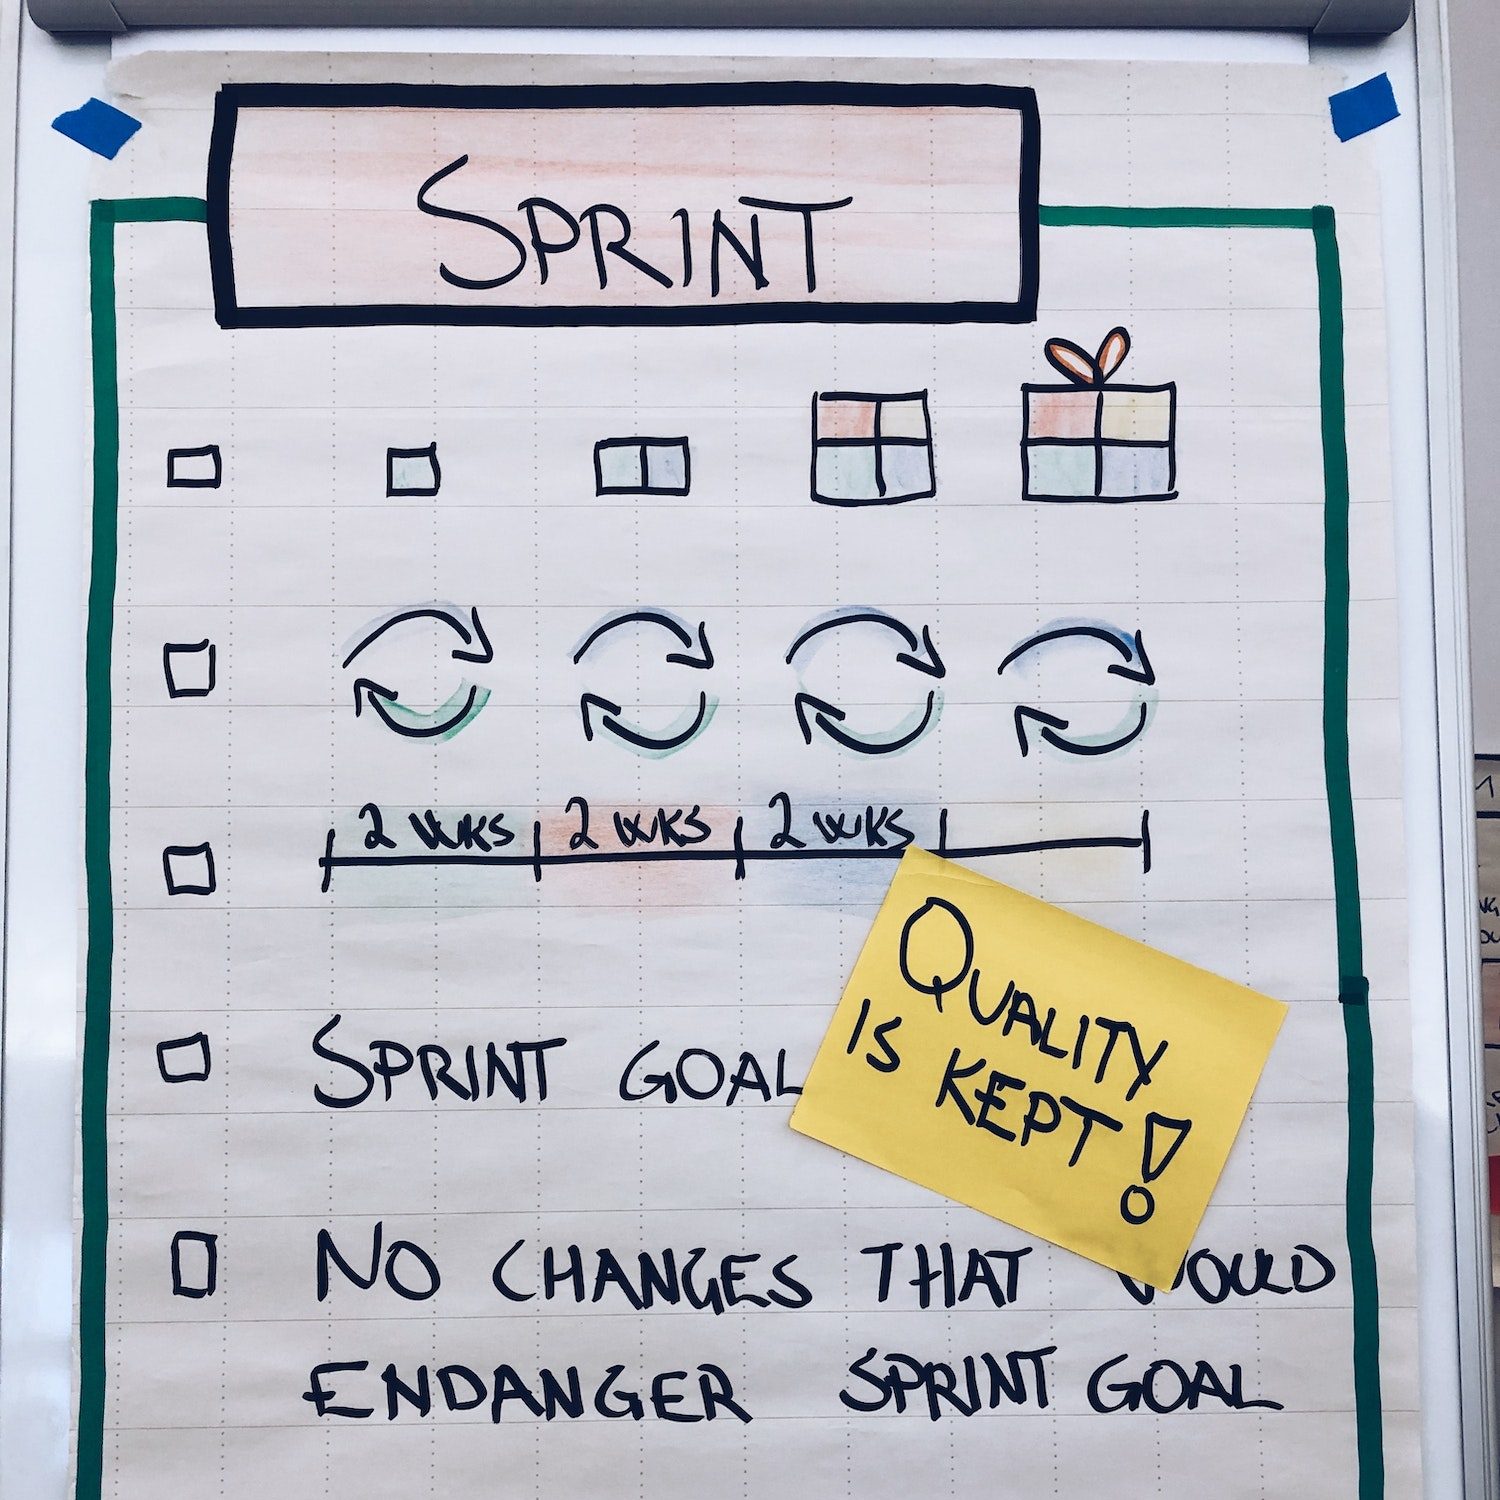 Sprint goals Agile Scrum plannig. Quality is kept.